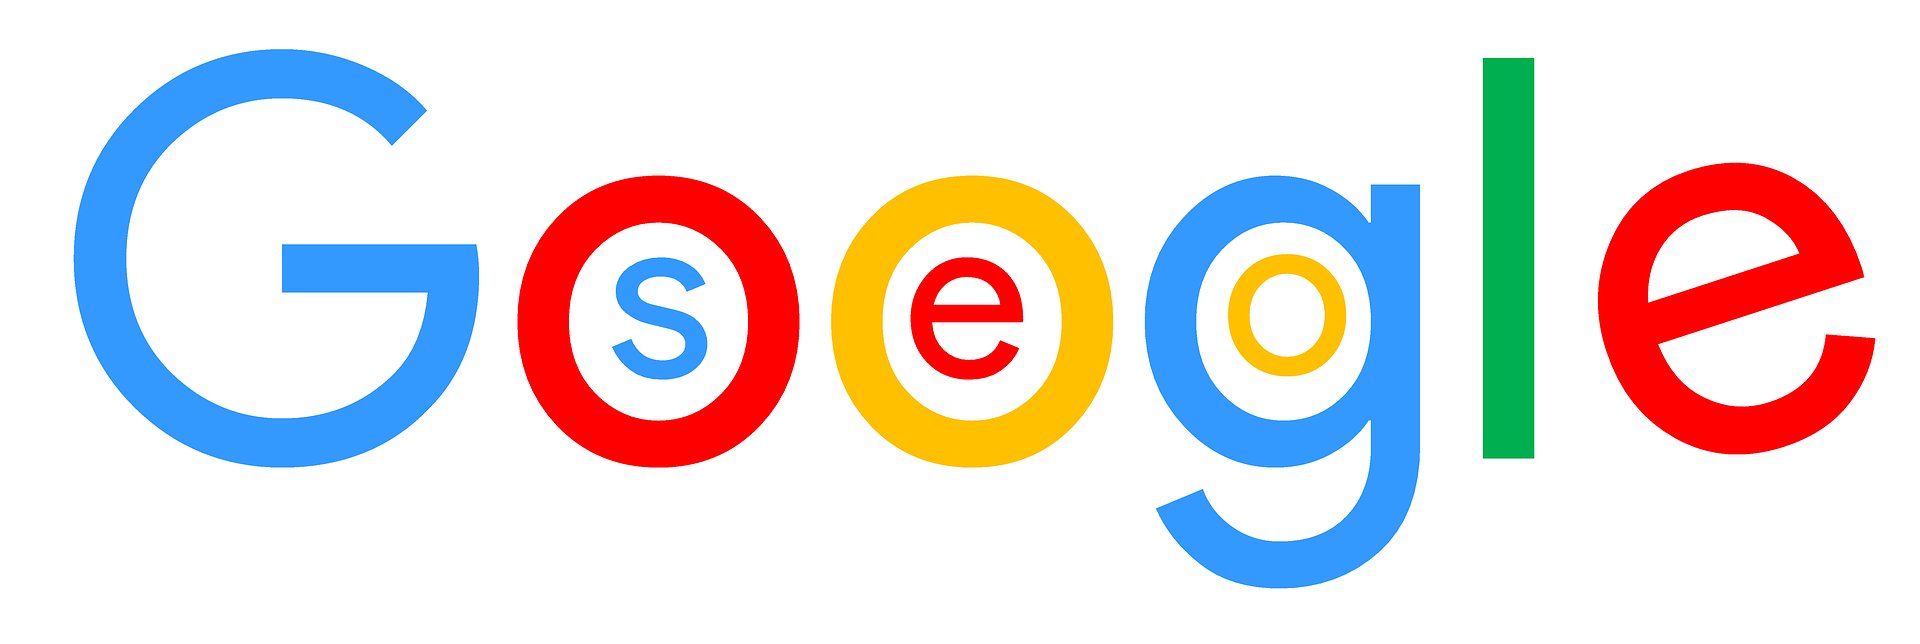 Google_SEO_Logo.png